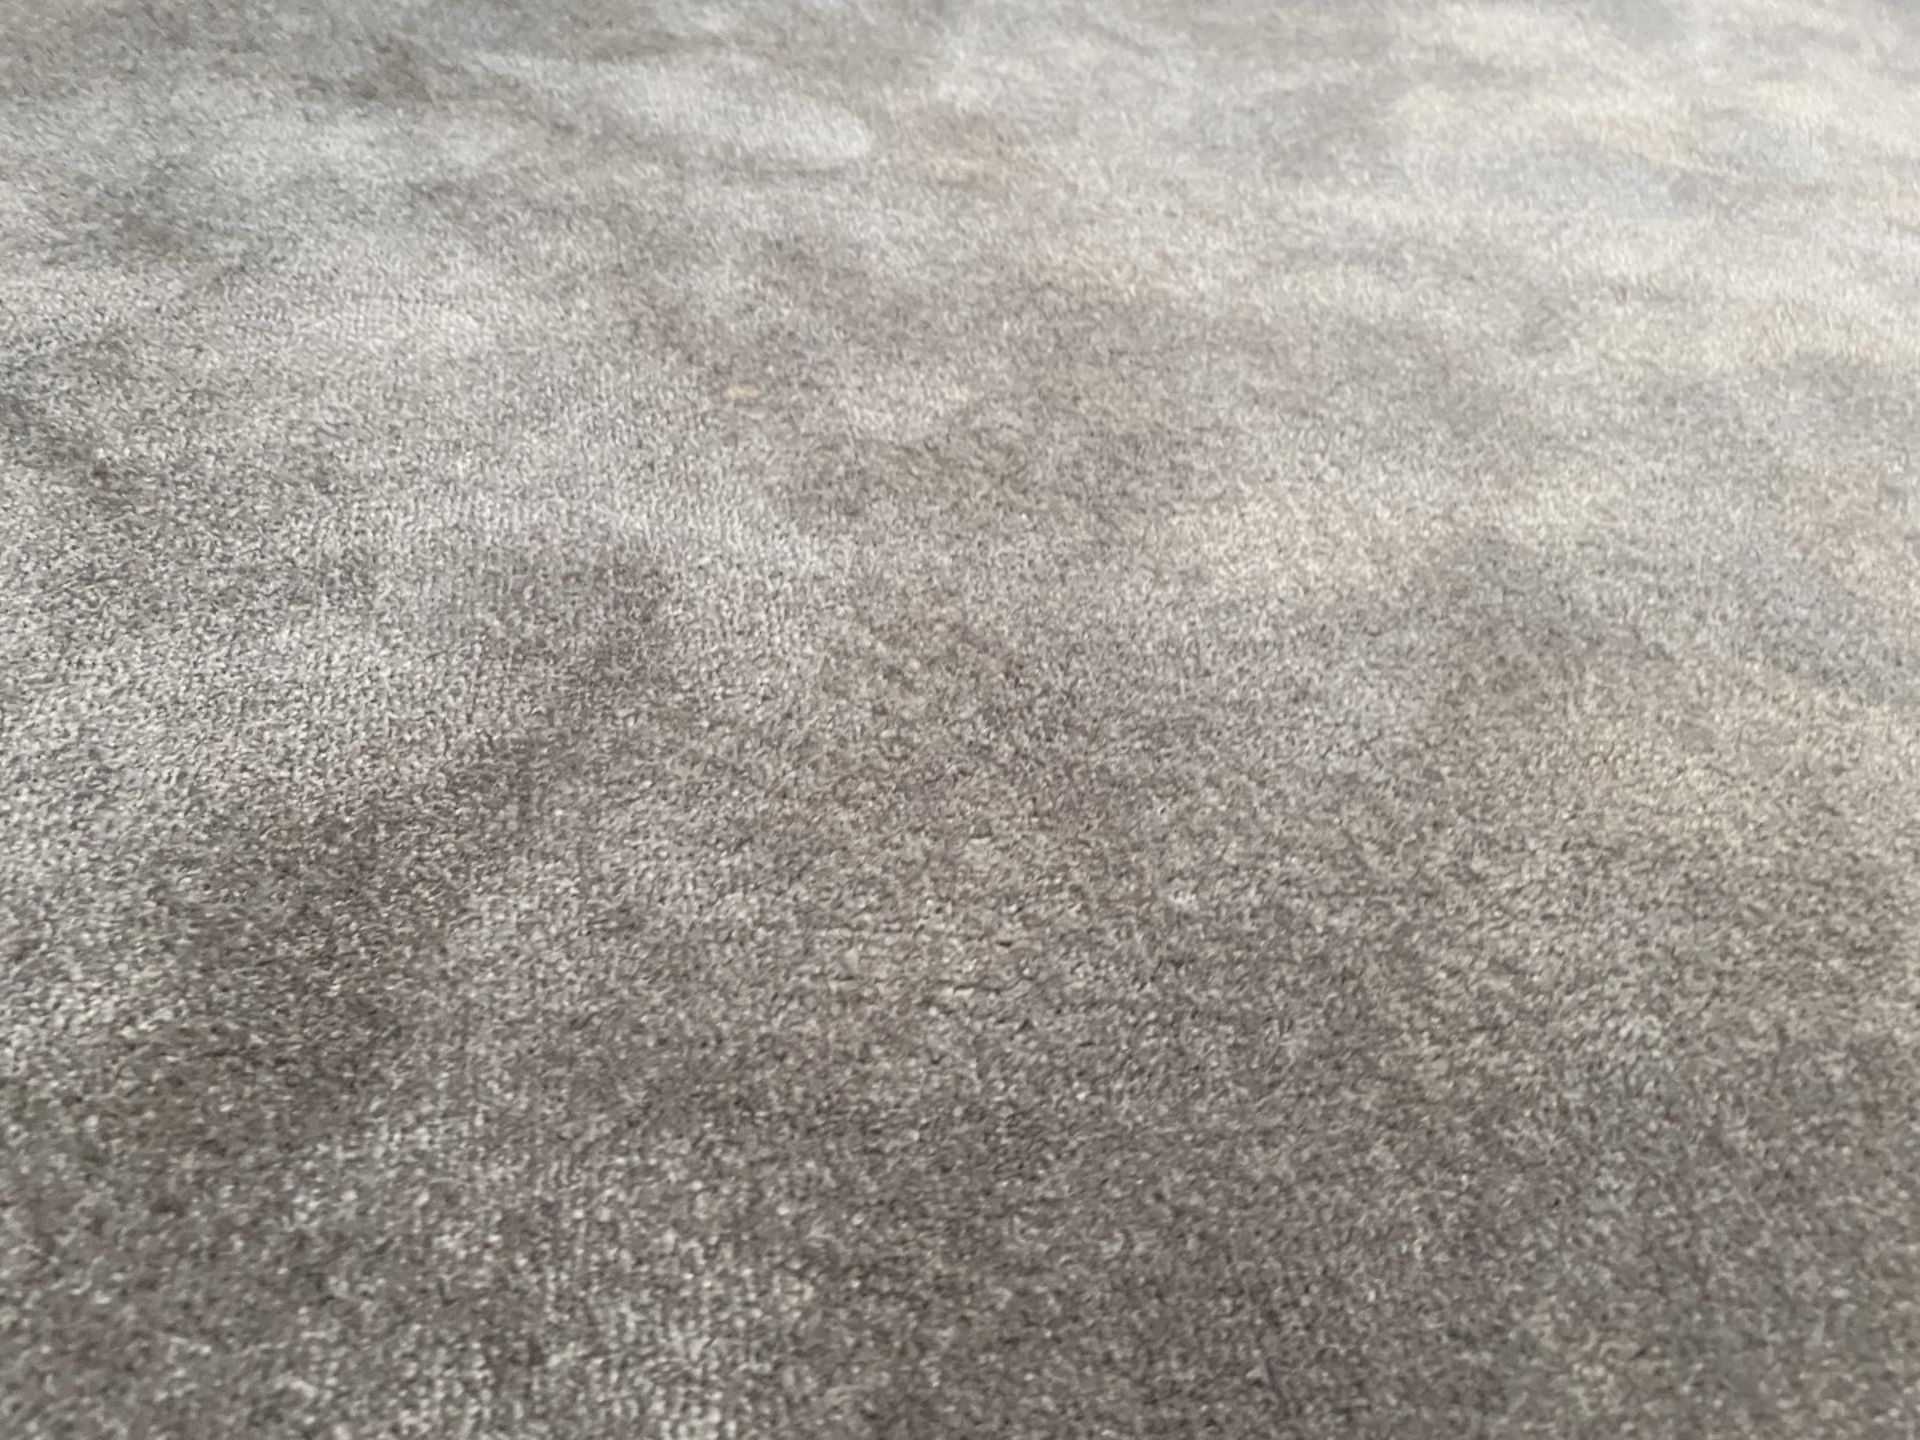 1 x Premium Bedroom Carpet In Grey (4.6 x 3.2m) - Ref: FRNT-BD/2ndFLR - CL742 - Image 5 of 6